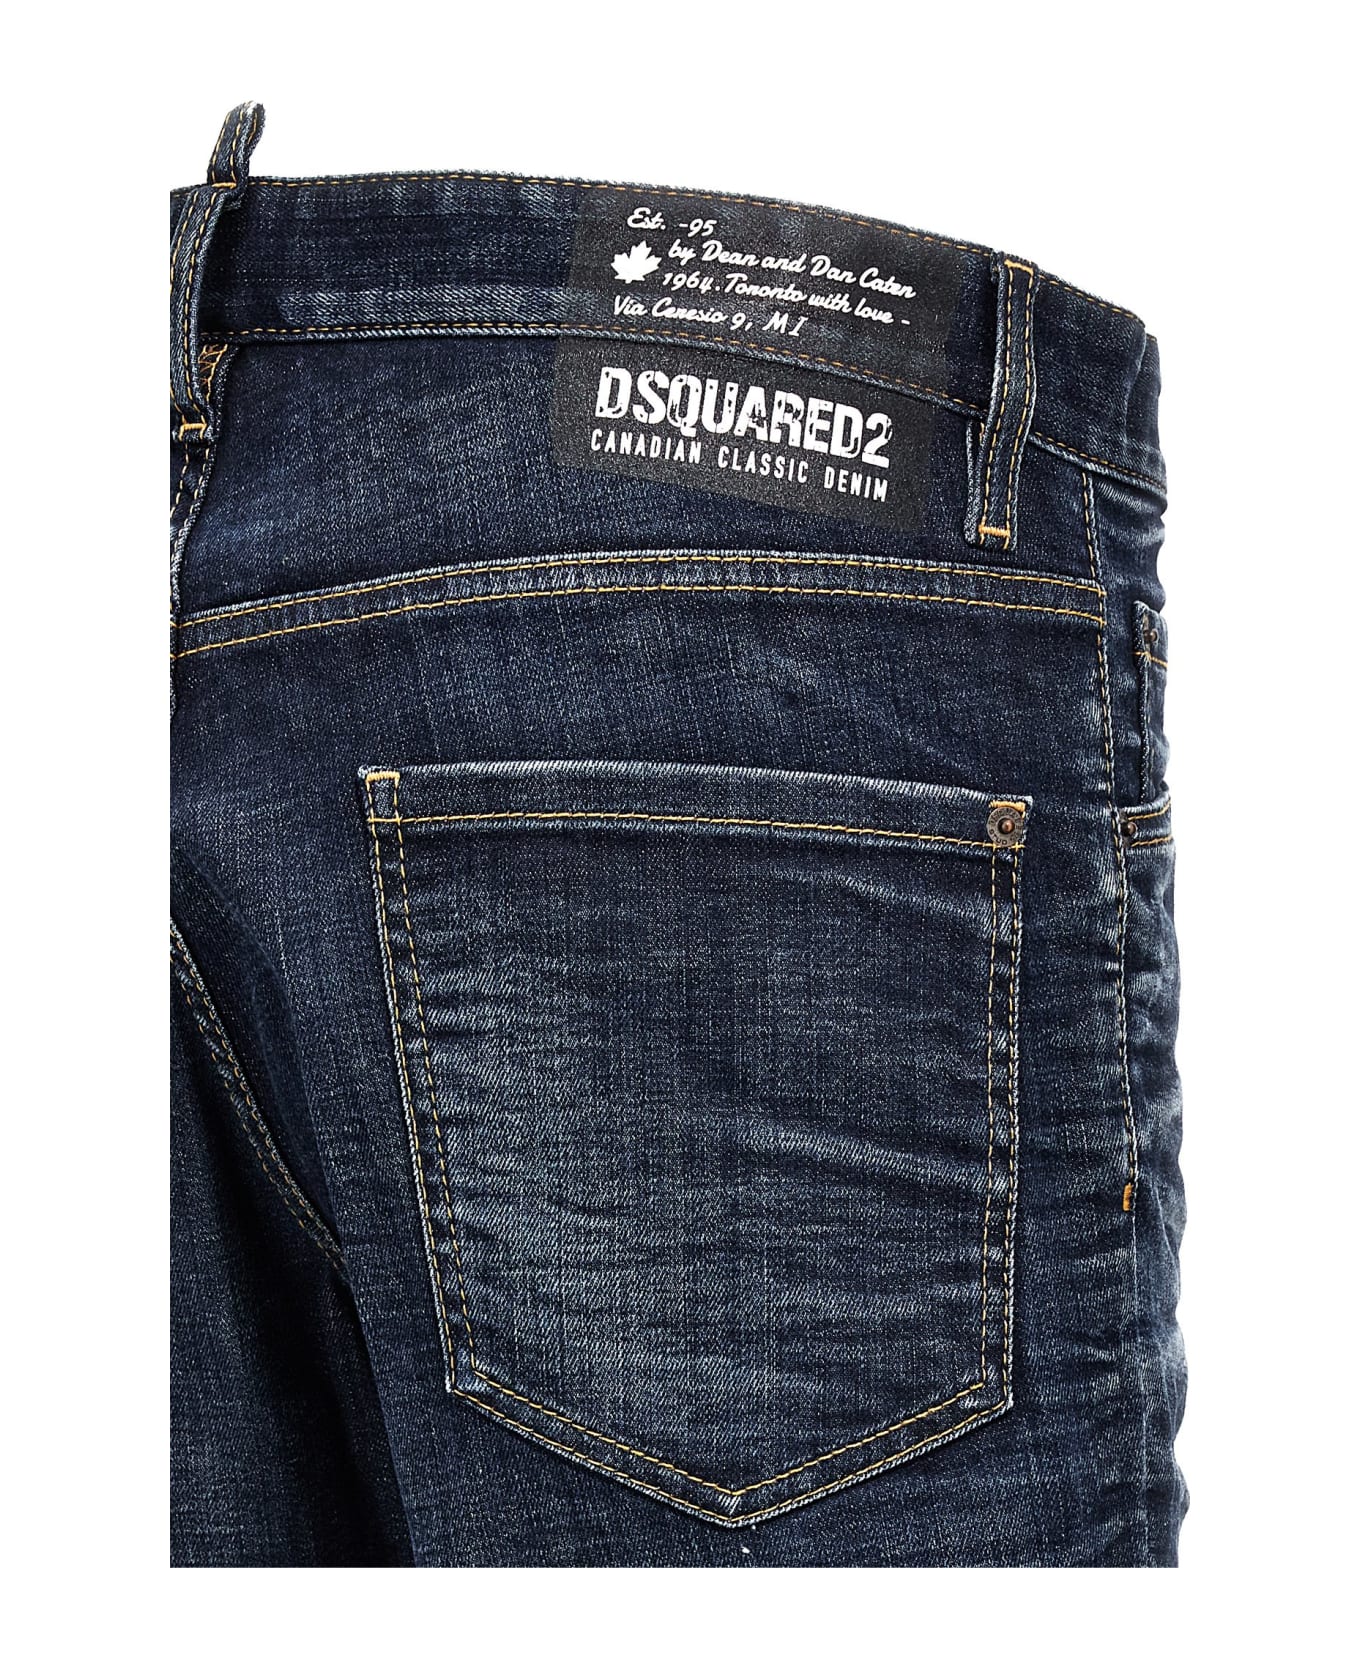 Dsquared2 Cool-guy Jeans - Denim